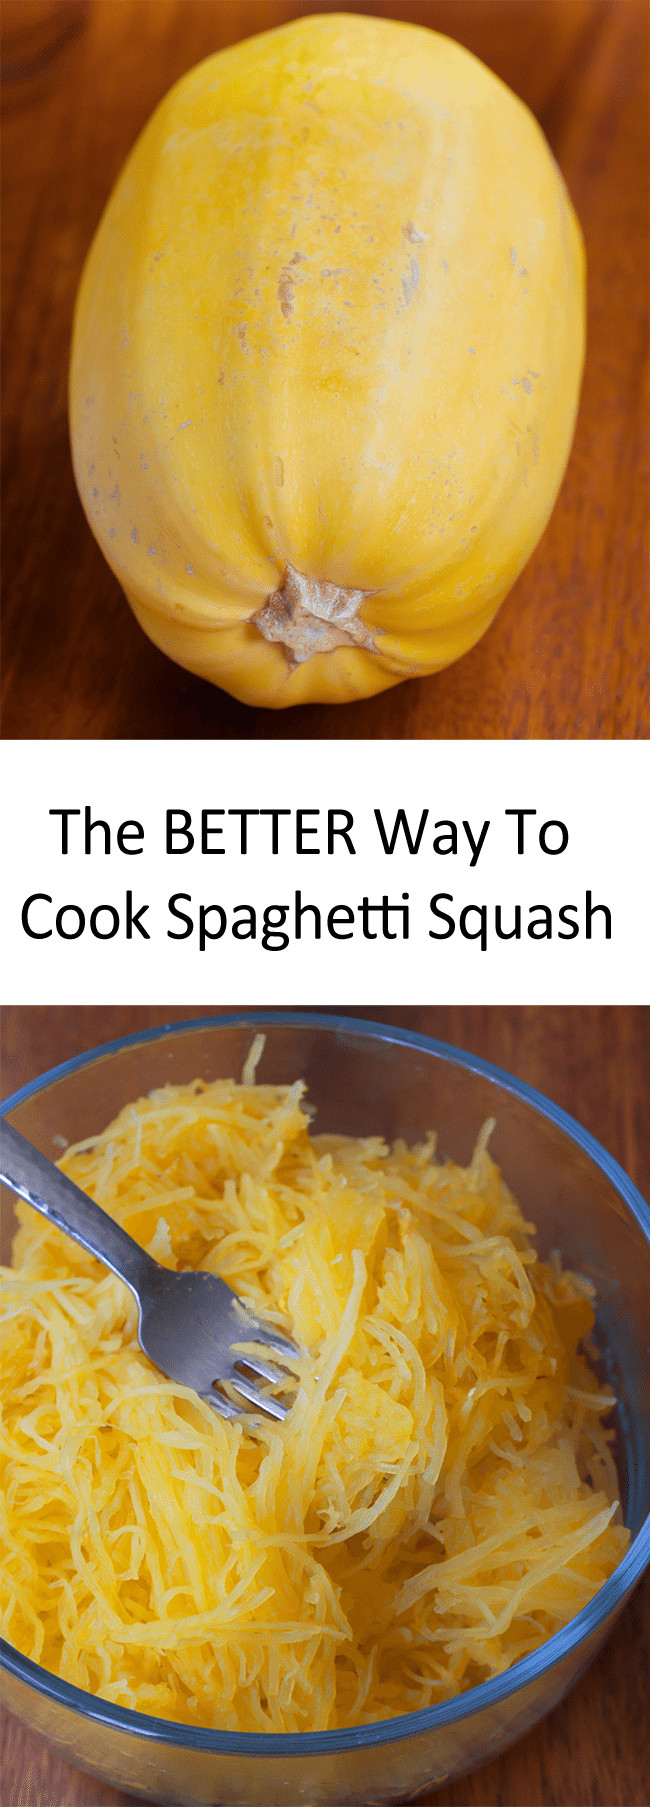 Cooking Spaghetti Squash In Microwave
 How To Cook Spaghetti Squash